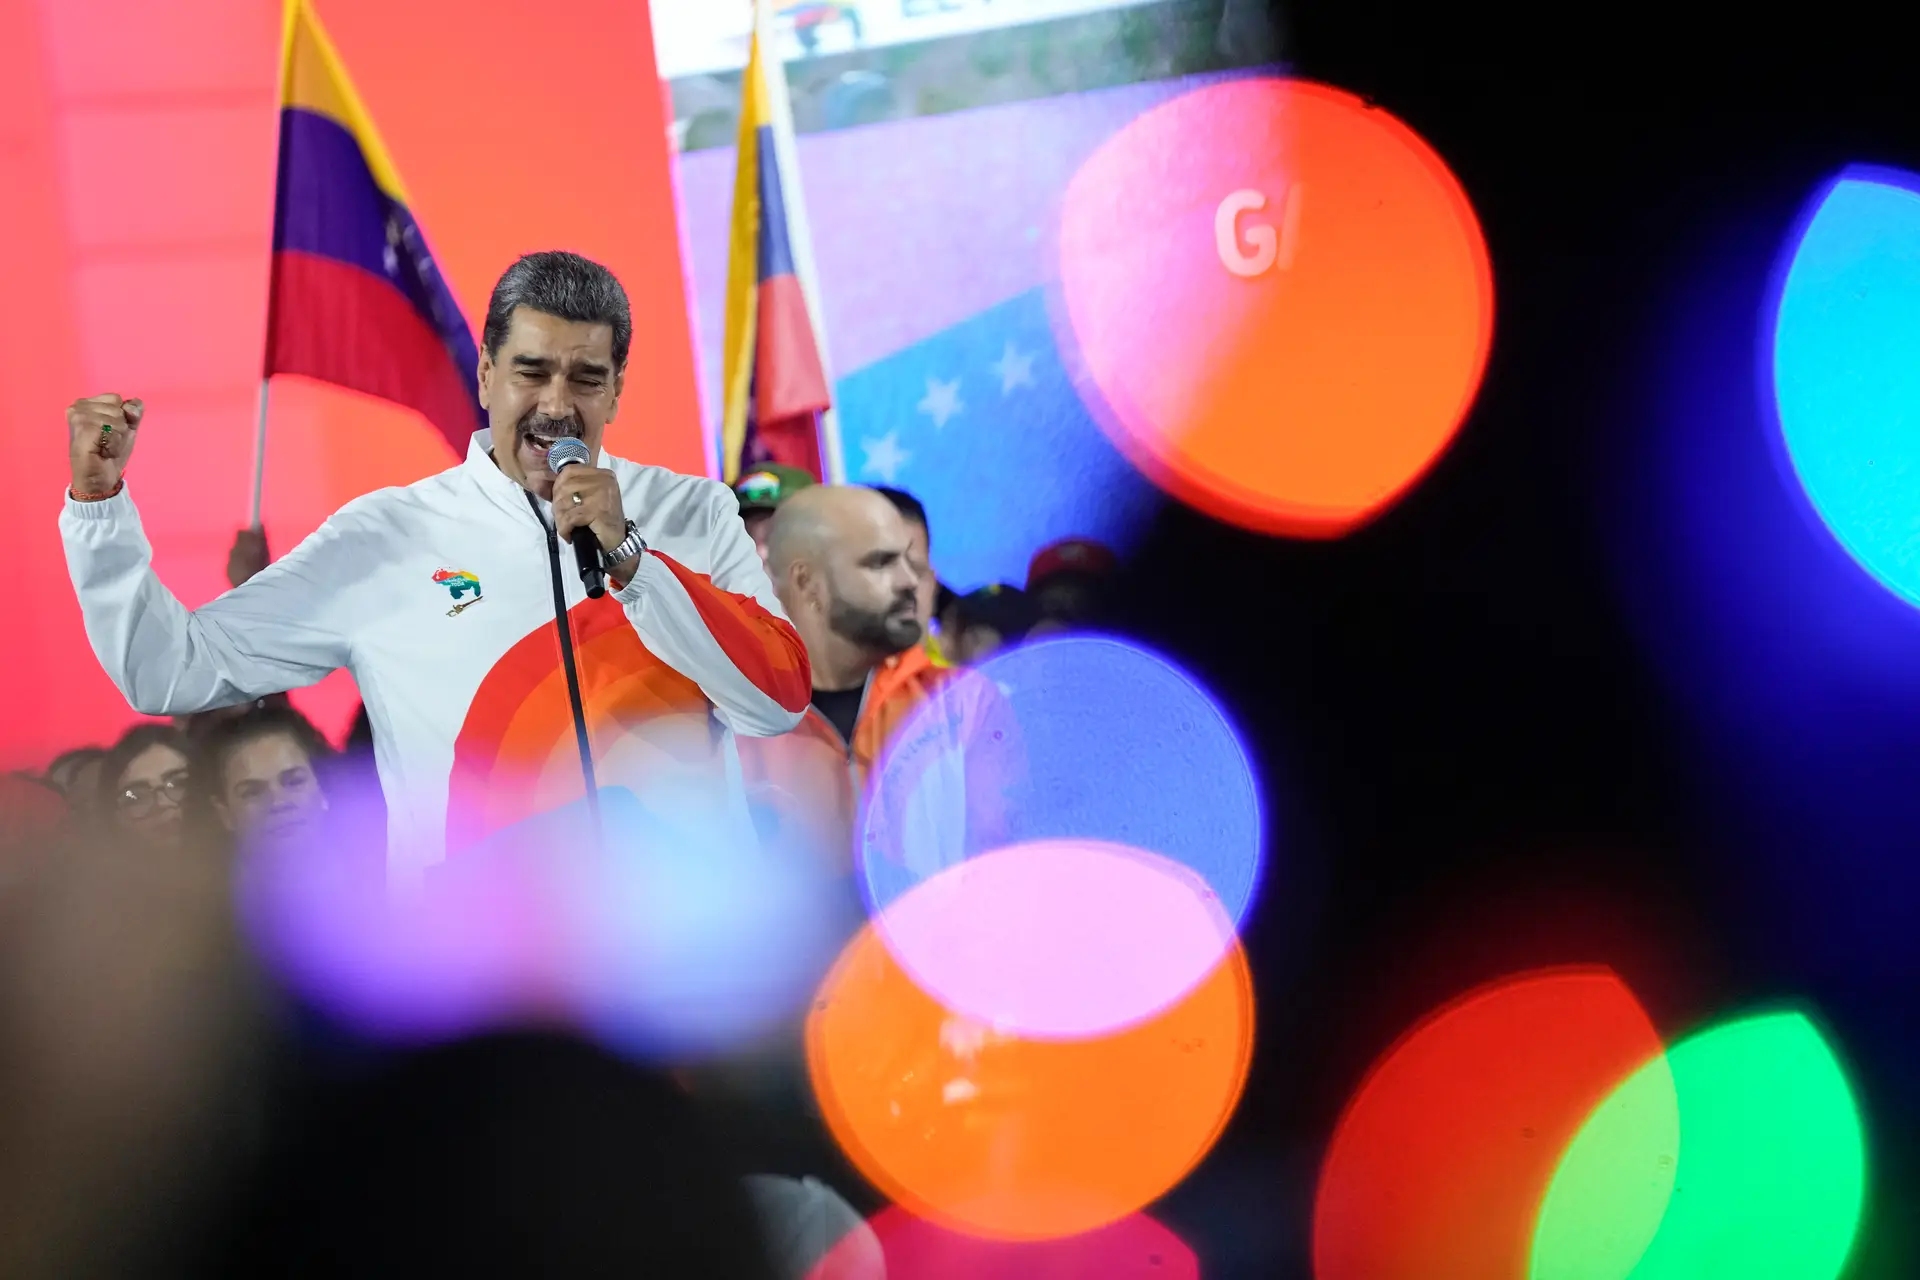 Múcio: 'Em hipótese nenhuma' Maduro vai usar território brasileiro para  invadir Guiana, Brasil